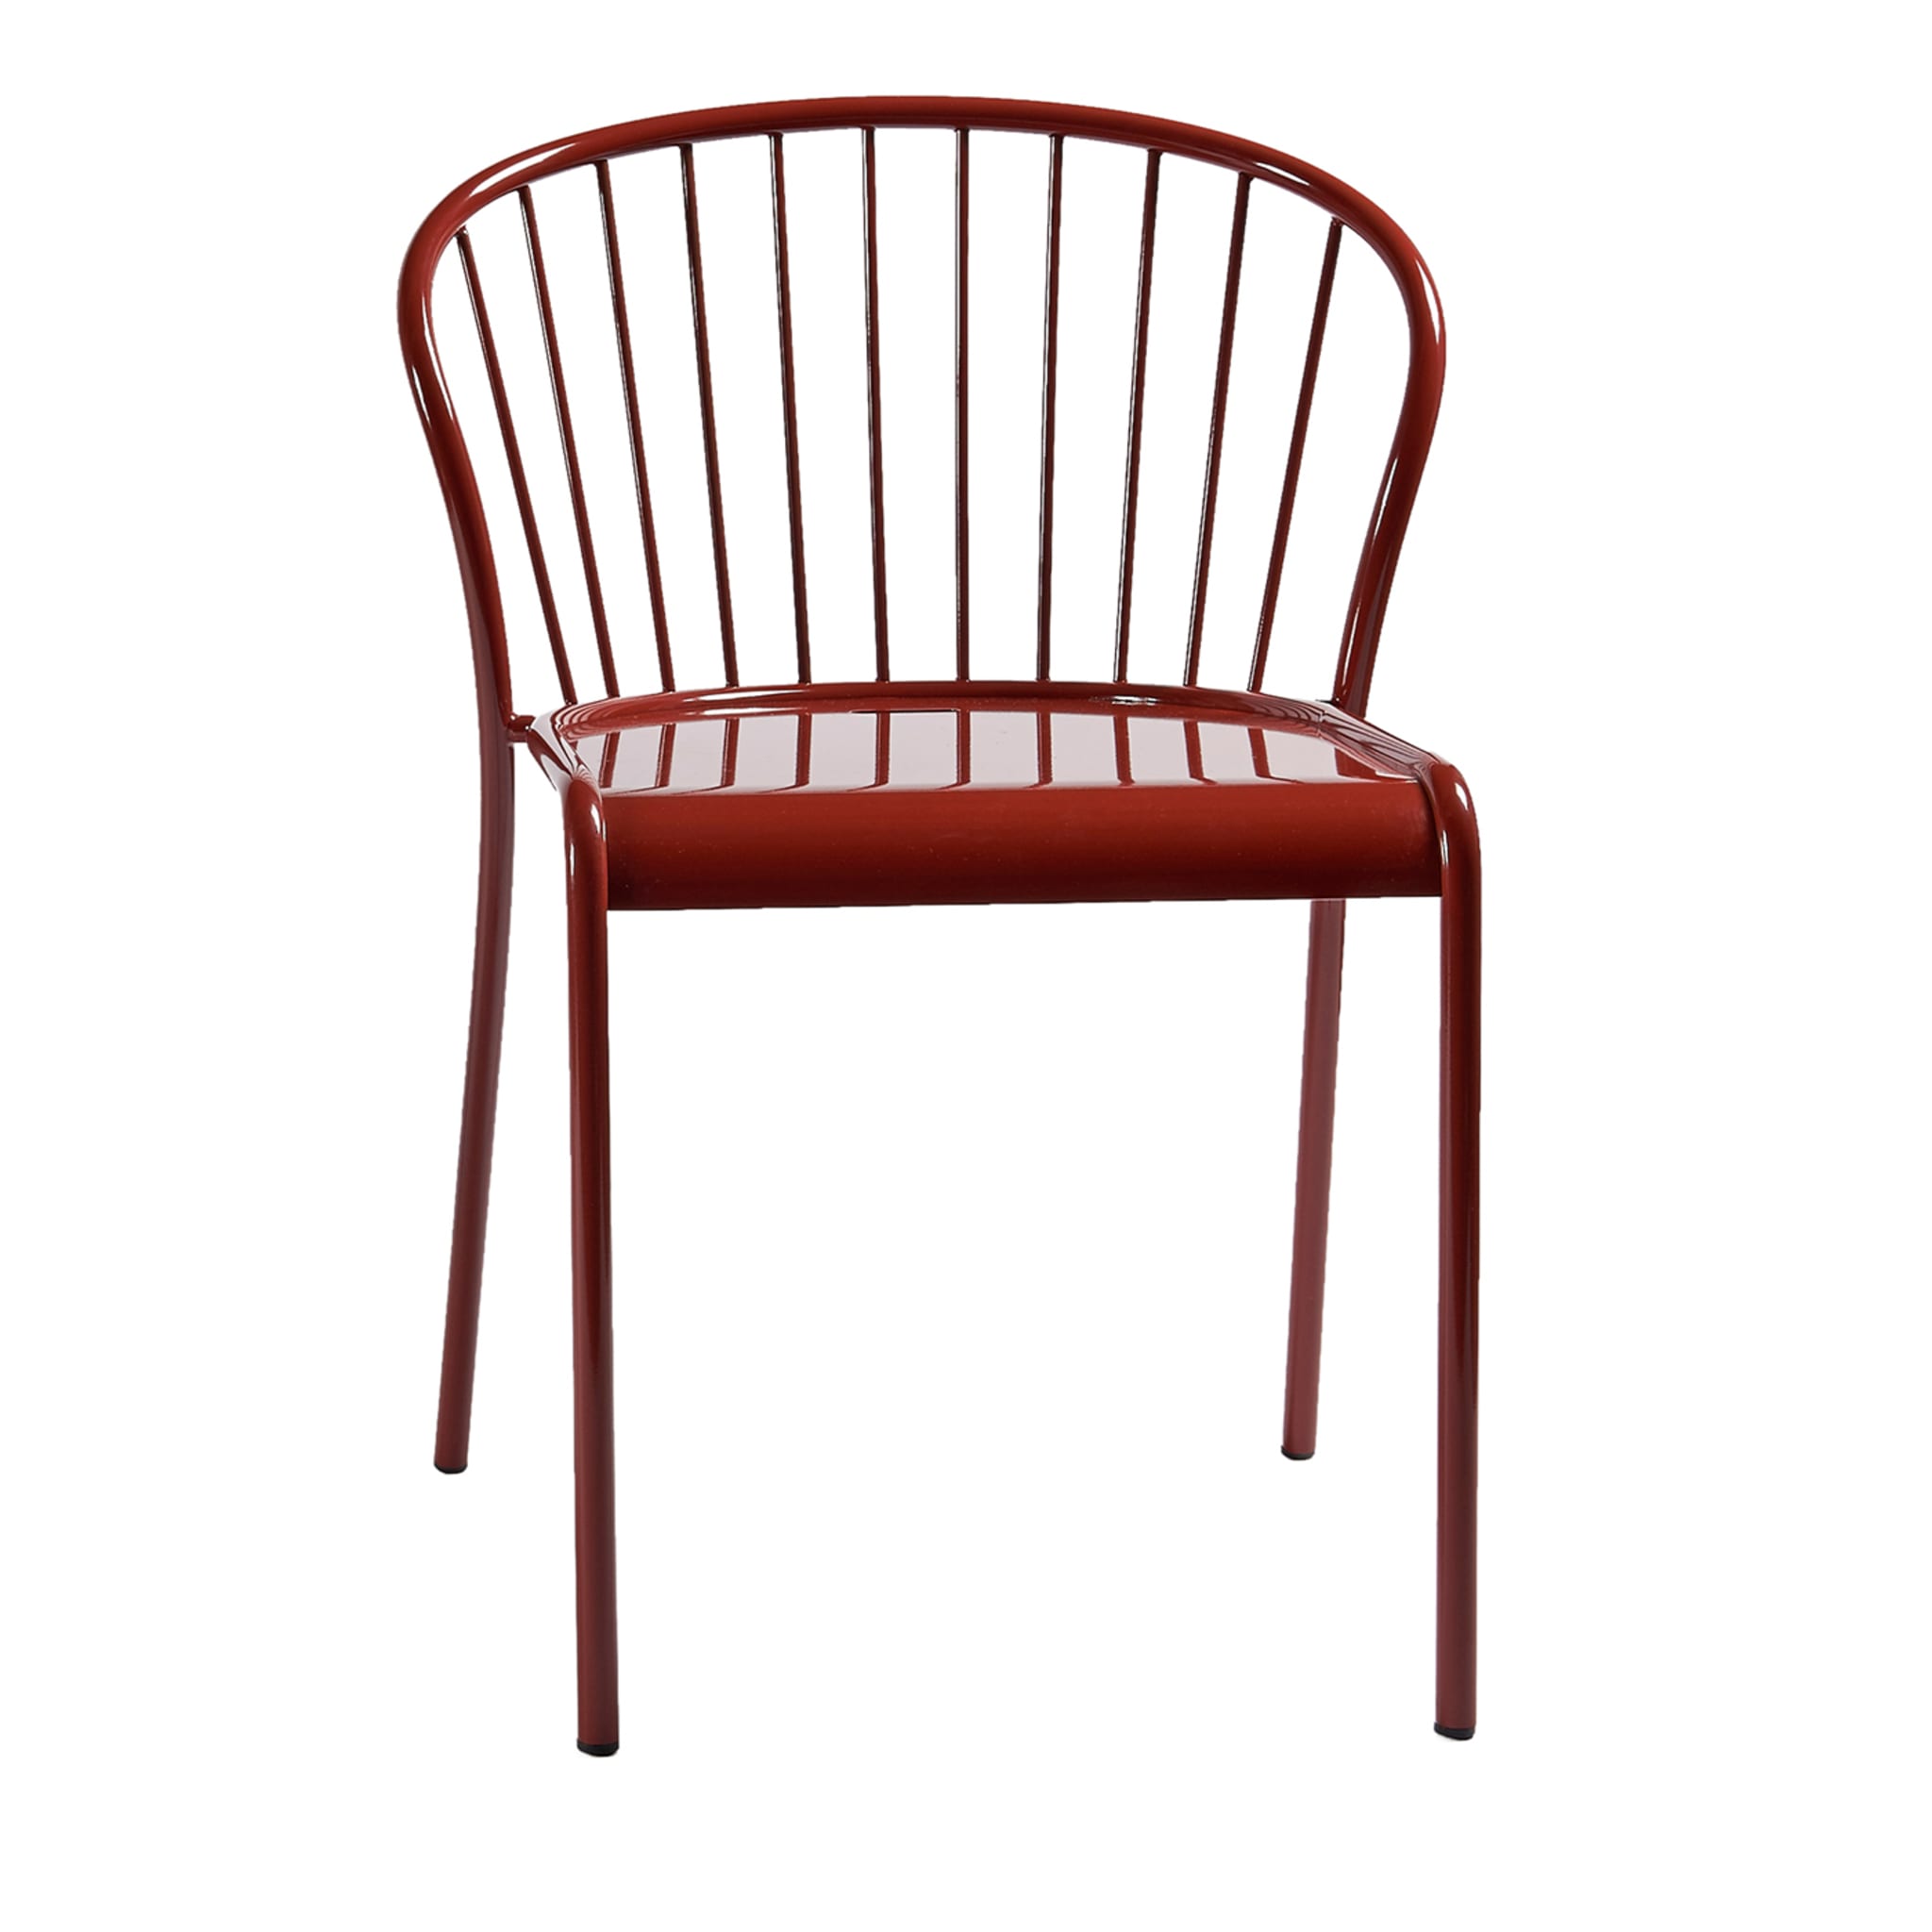 Cannet Roter Stuhl - Hauptansicht